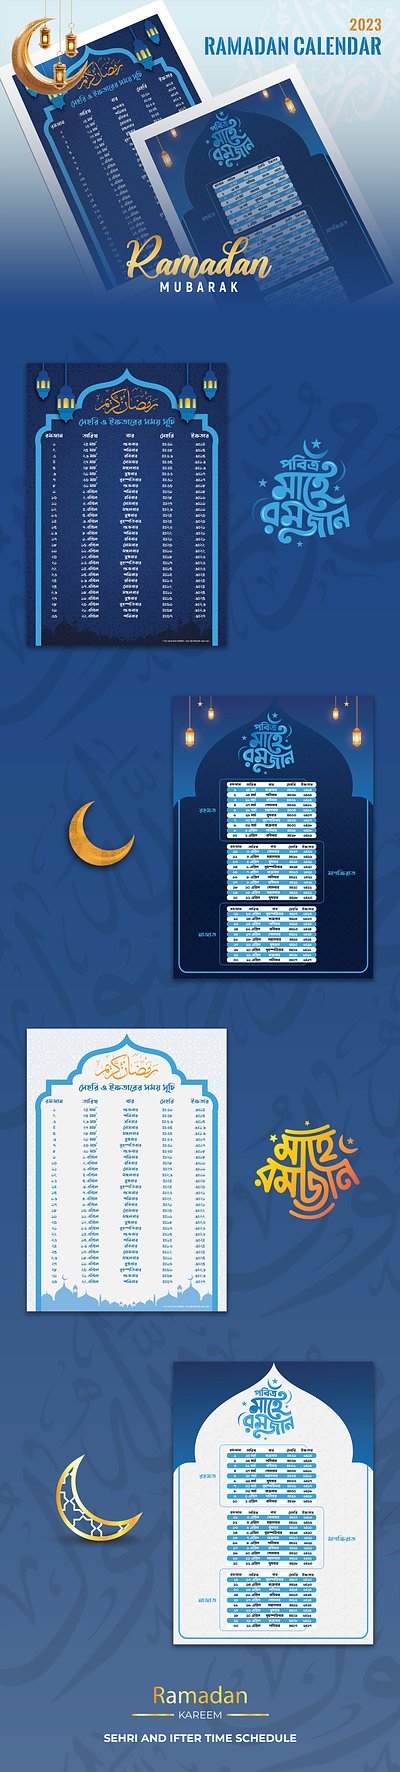 Ramadan Calendar Design 2023 a4 design branding graphic design printable calendar ramadan ramadan 2023 ramadan calendar ramadan design ramadan mubarak ramadan schedule vector